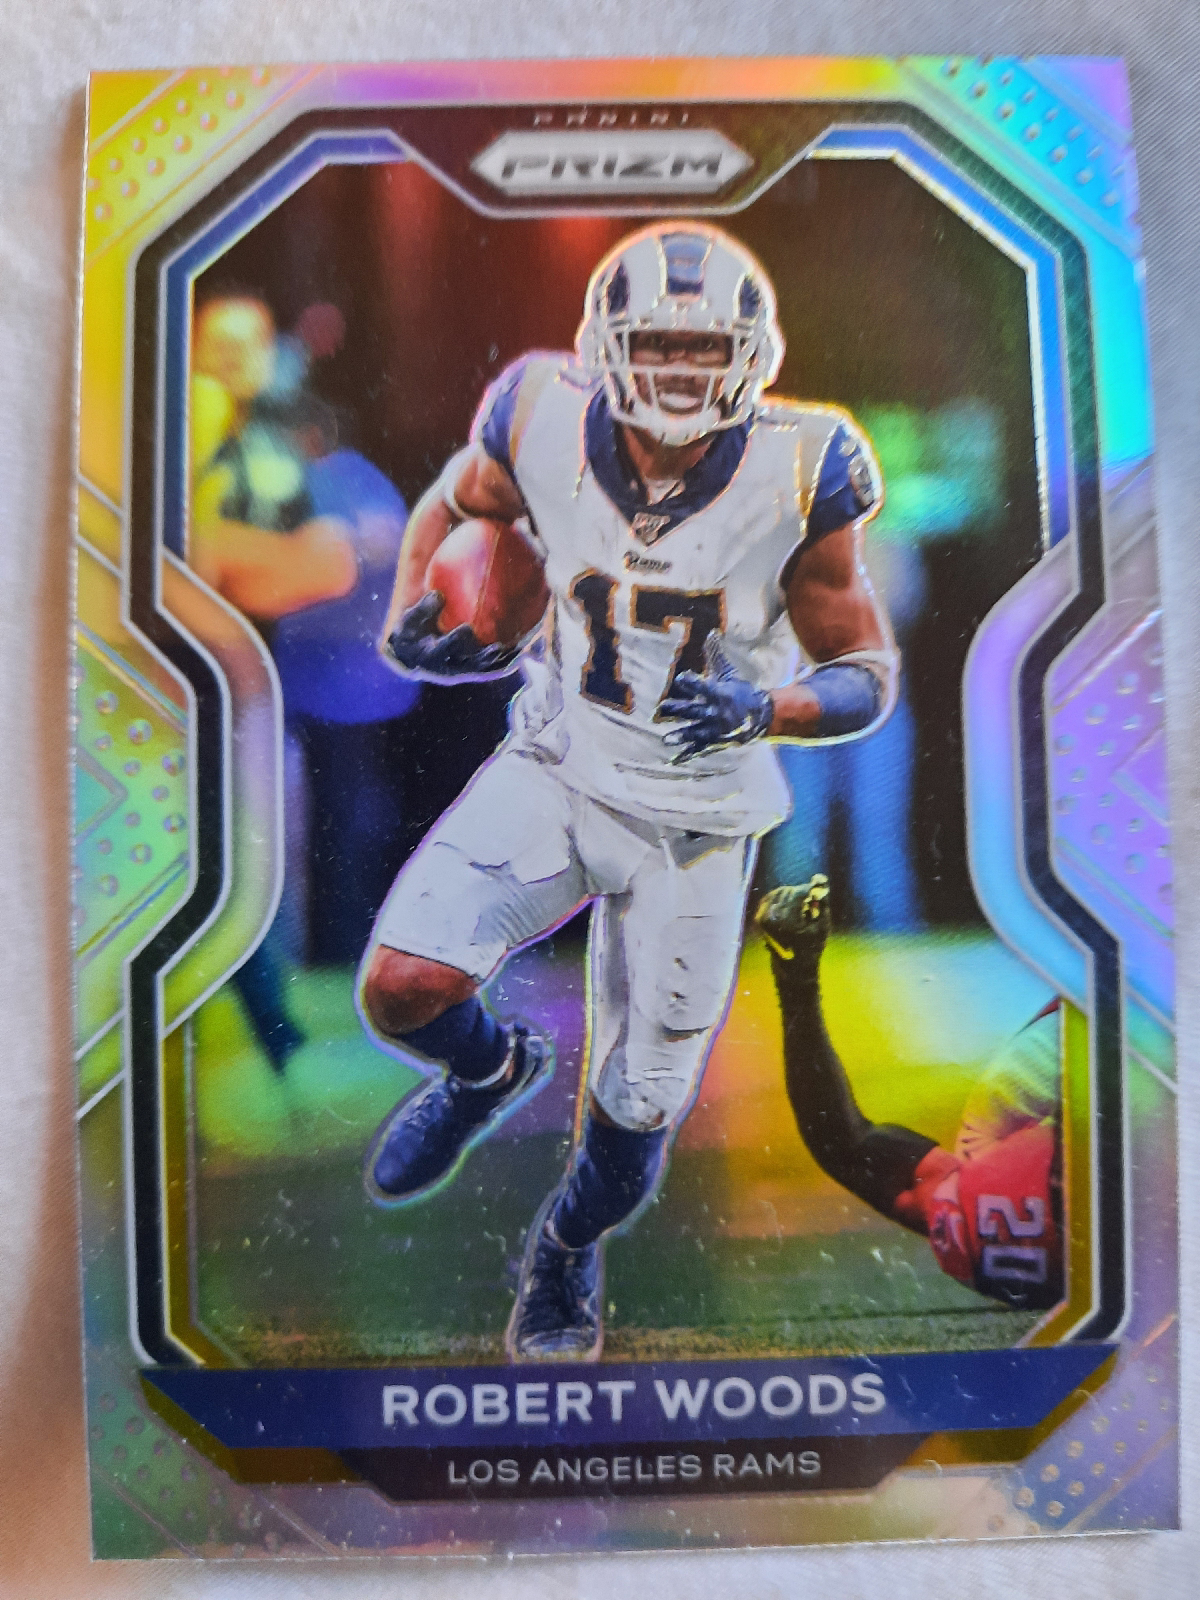 Sport Card Collectors: Random Cardboard:2020 Prizm Silver Robert Woods